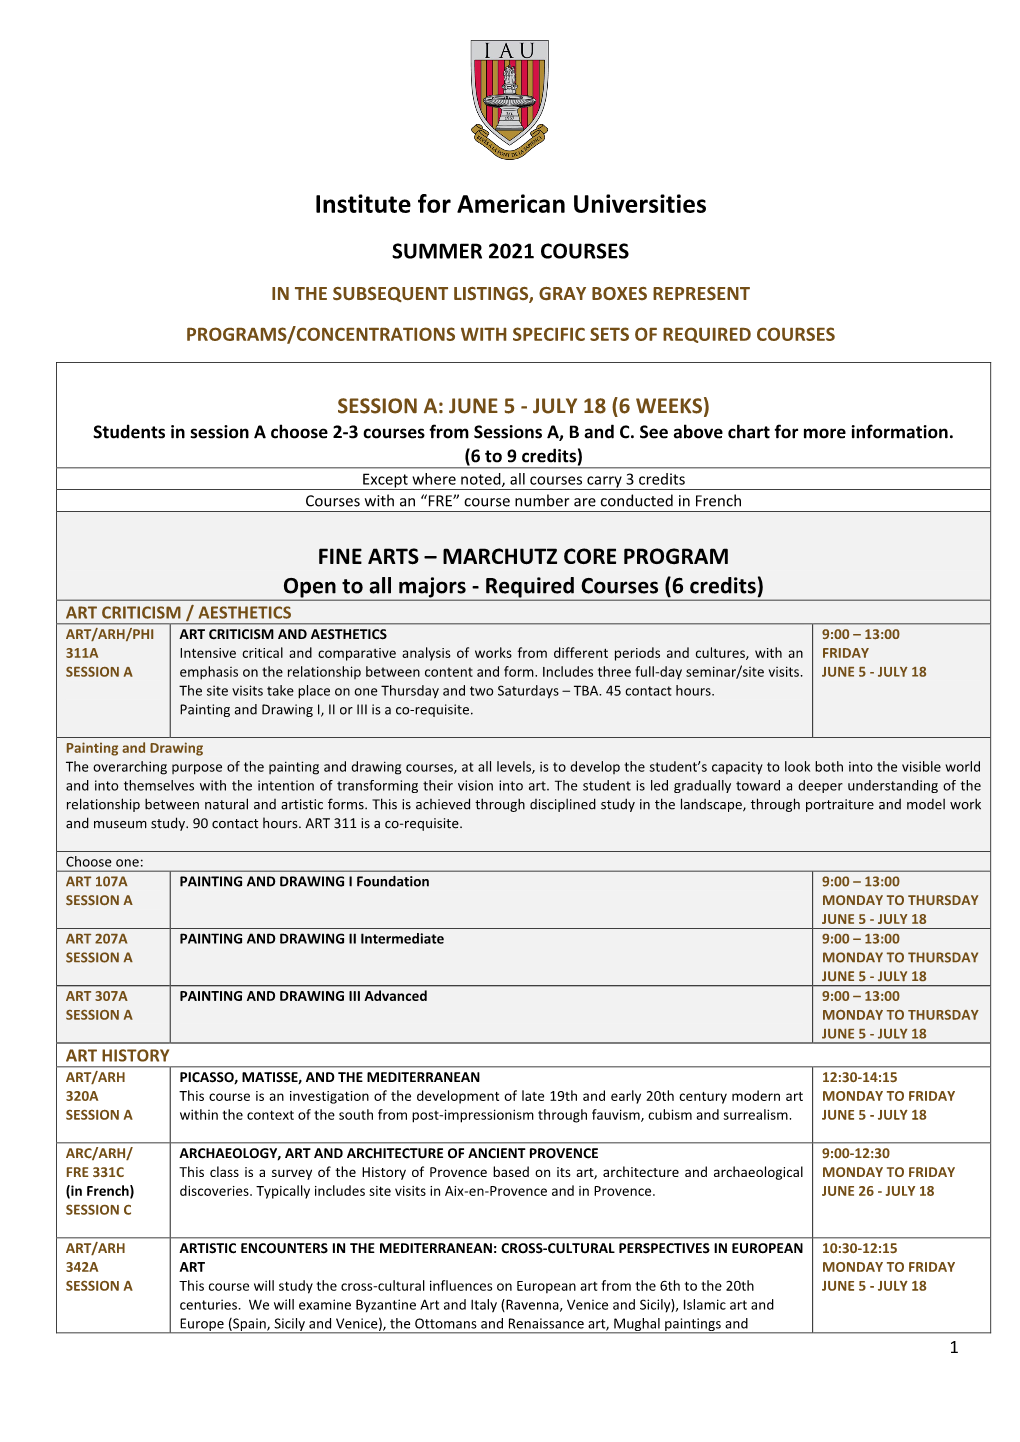 IAU Summer 2021 Courses